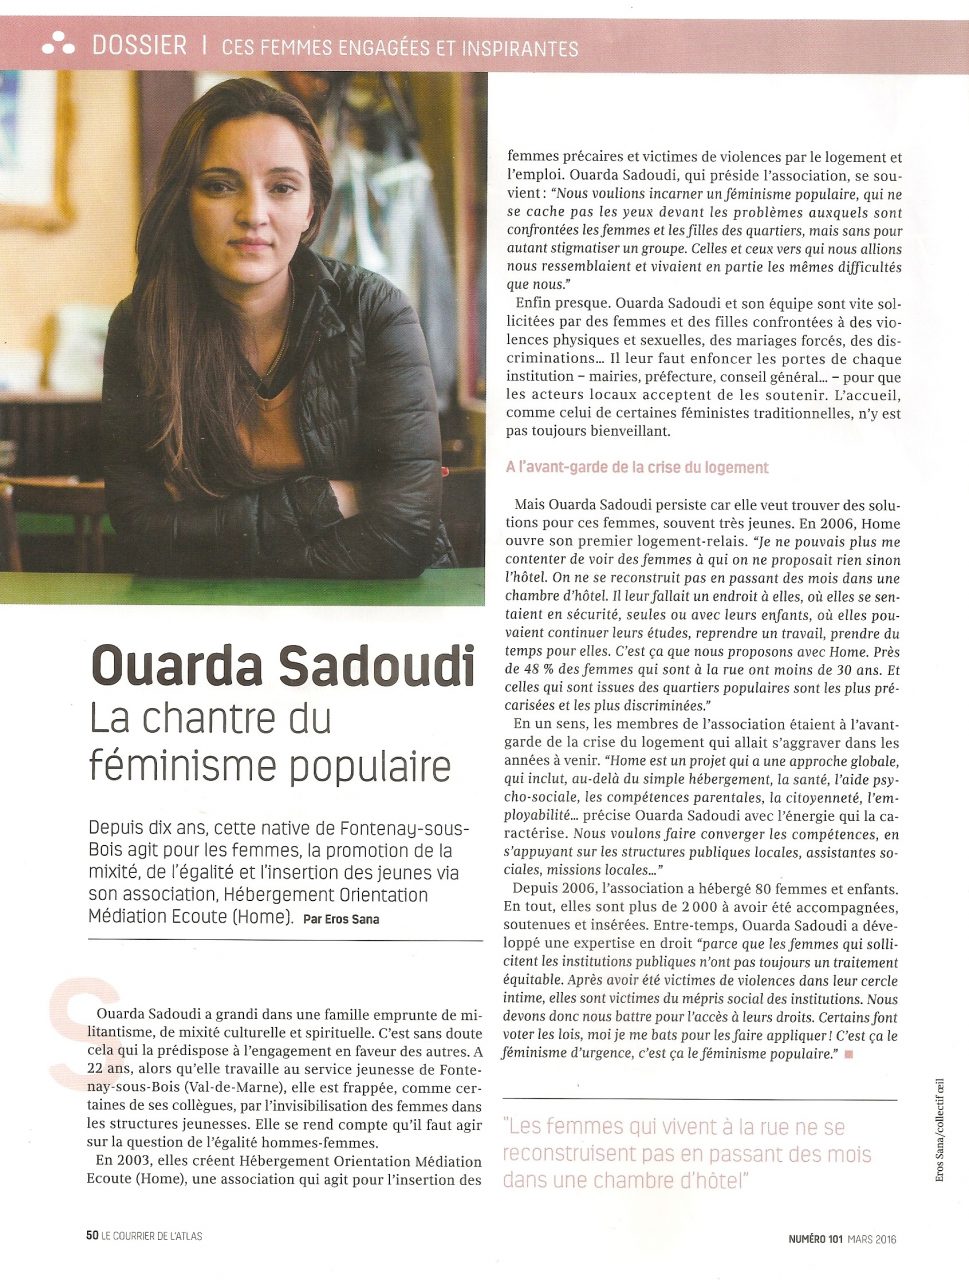 Ouarda Sadoudi